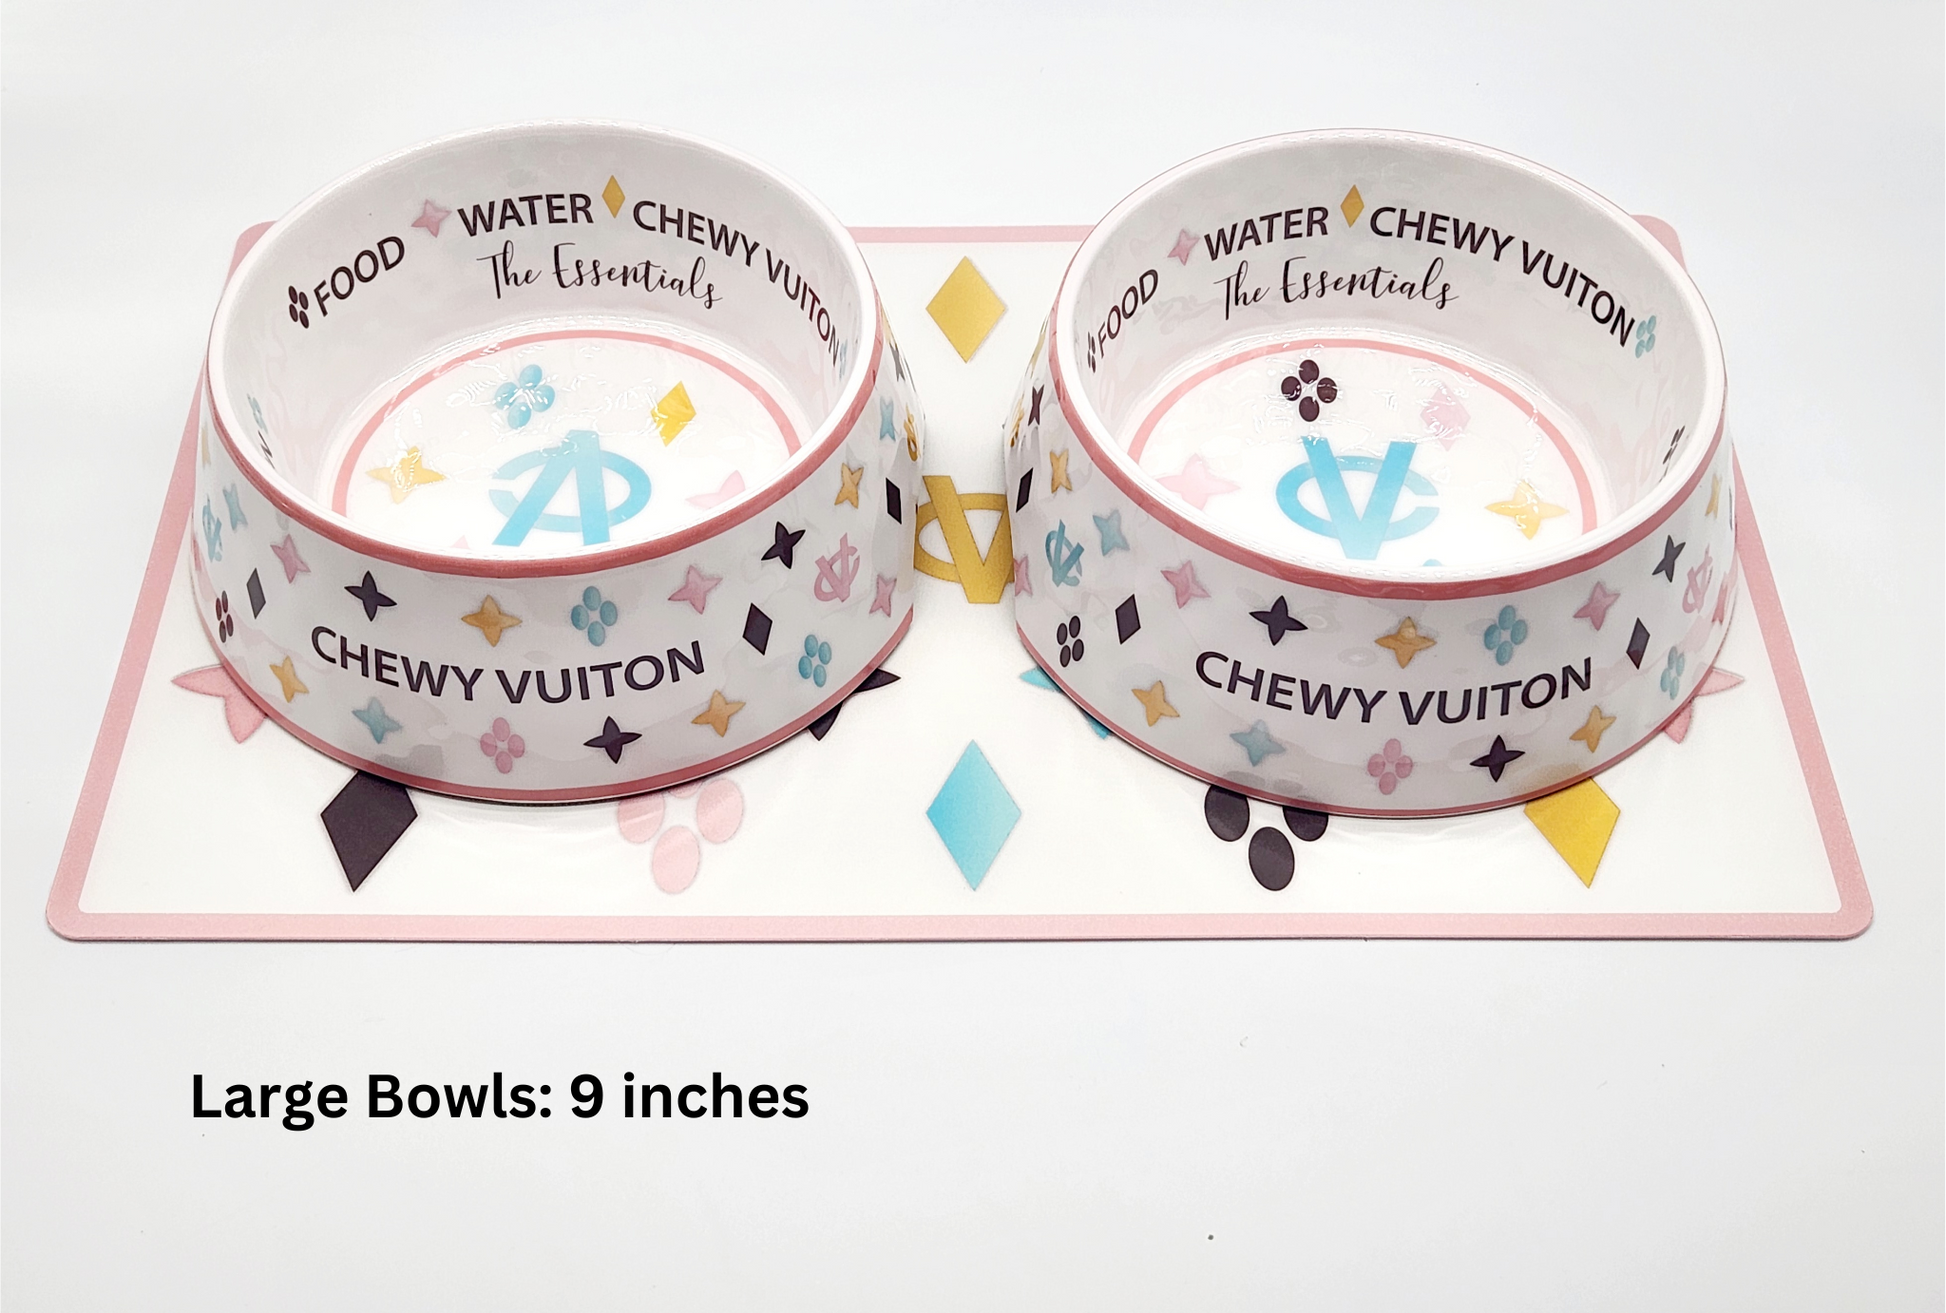 White Chewy Vuiton Dog Bowl Set